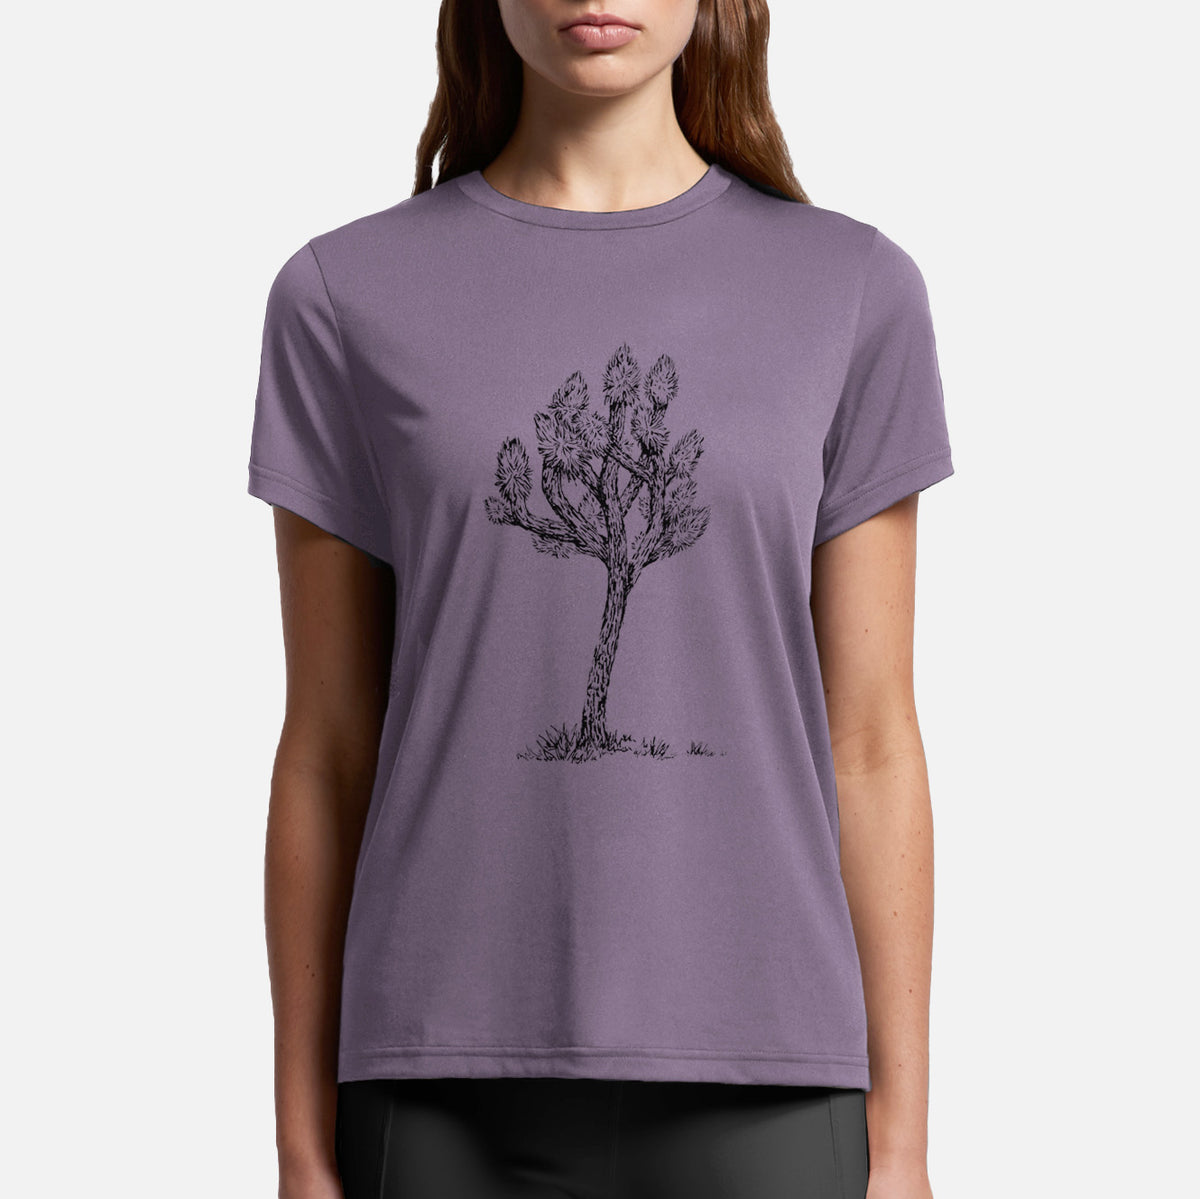 Yucca brevifolia - Joshua Tree - Womens Everyday Maple Tee